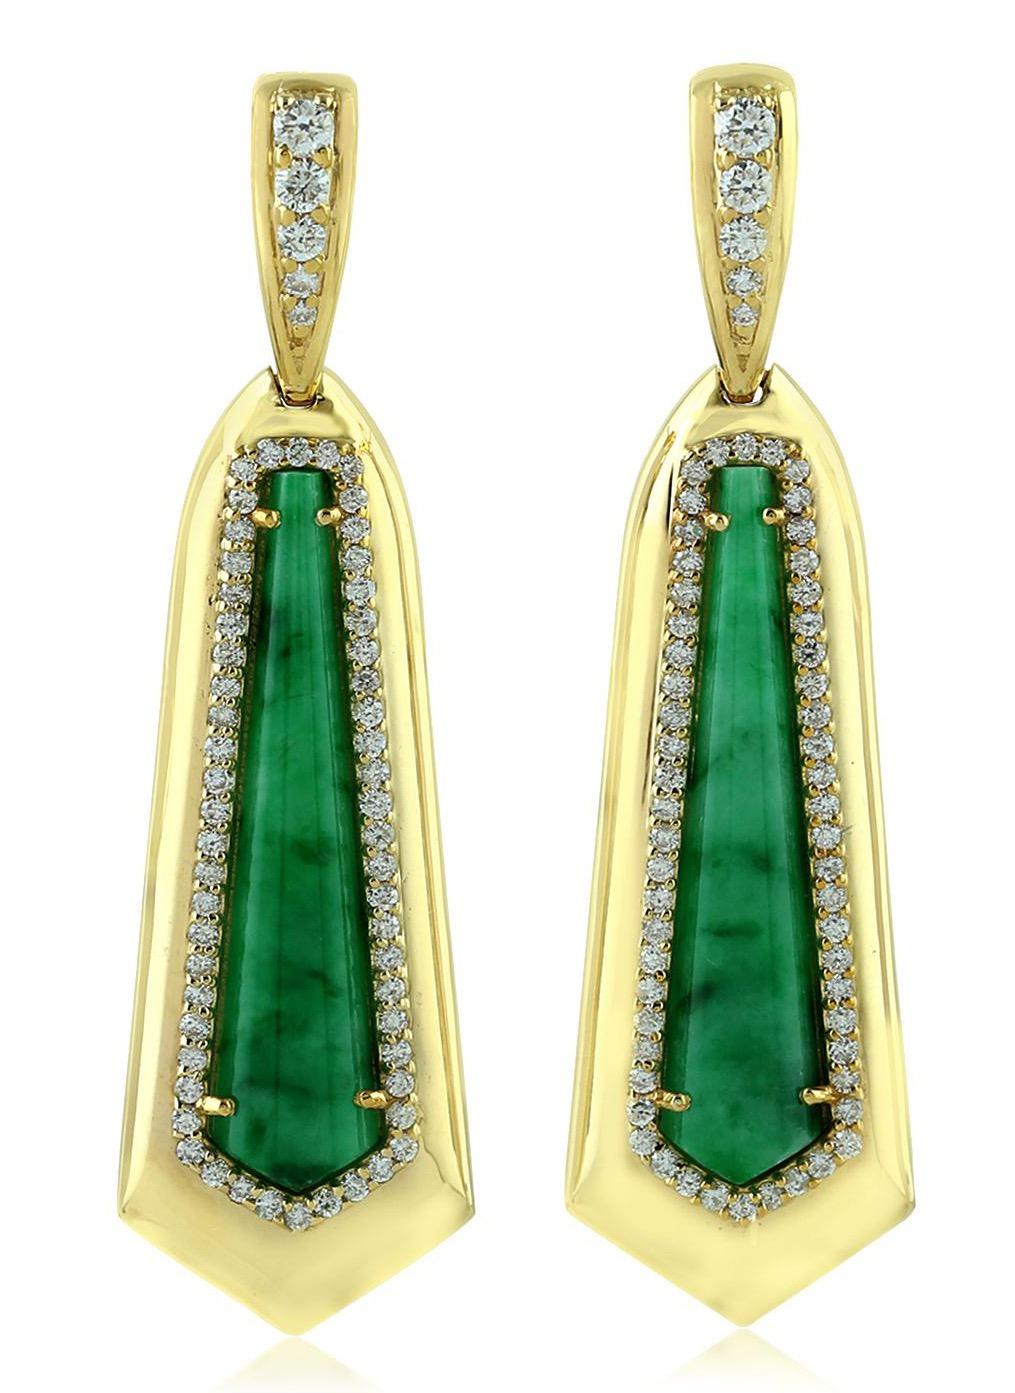 Mixed Cut 8.45 Carat Jade Diamond 18 Karat Gold Earrings For Sale